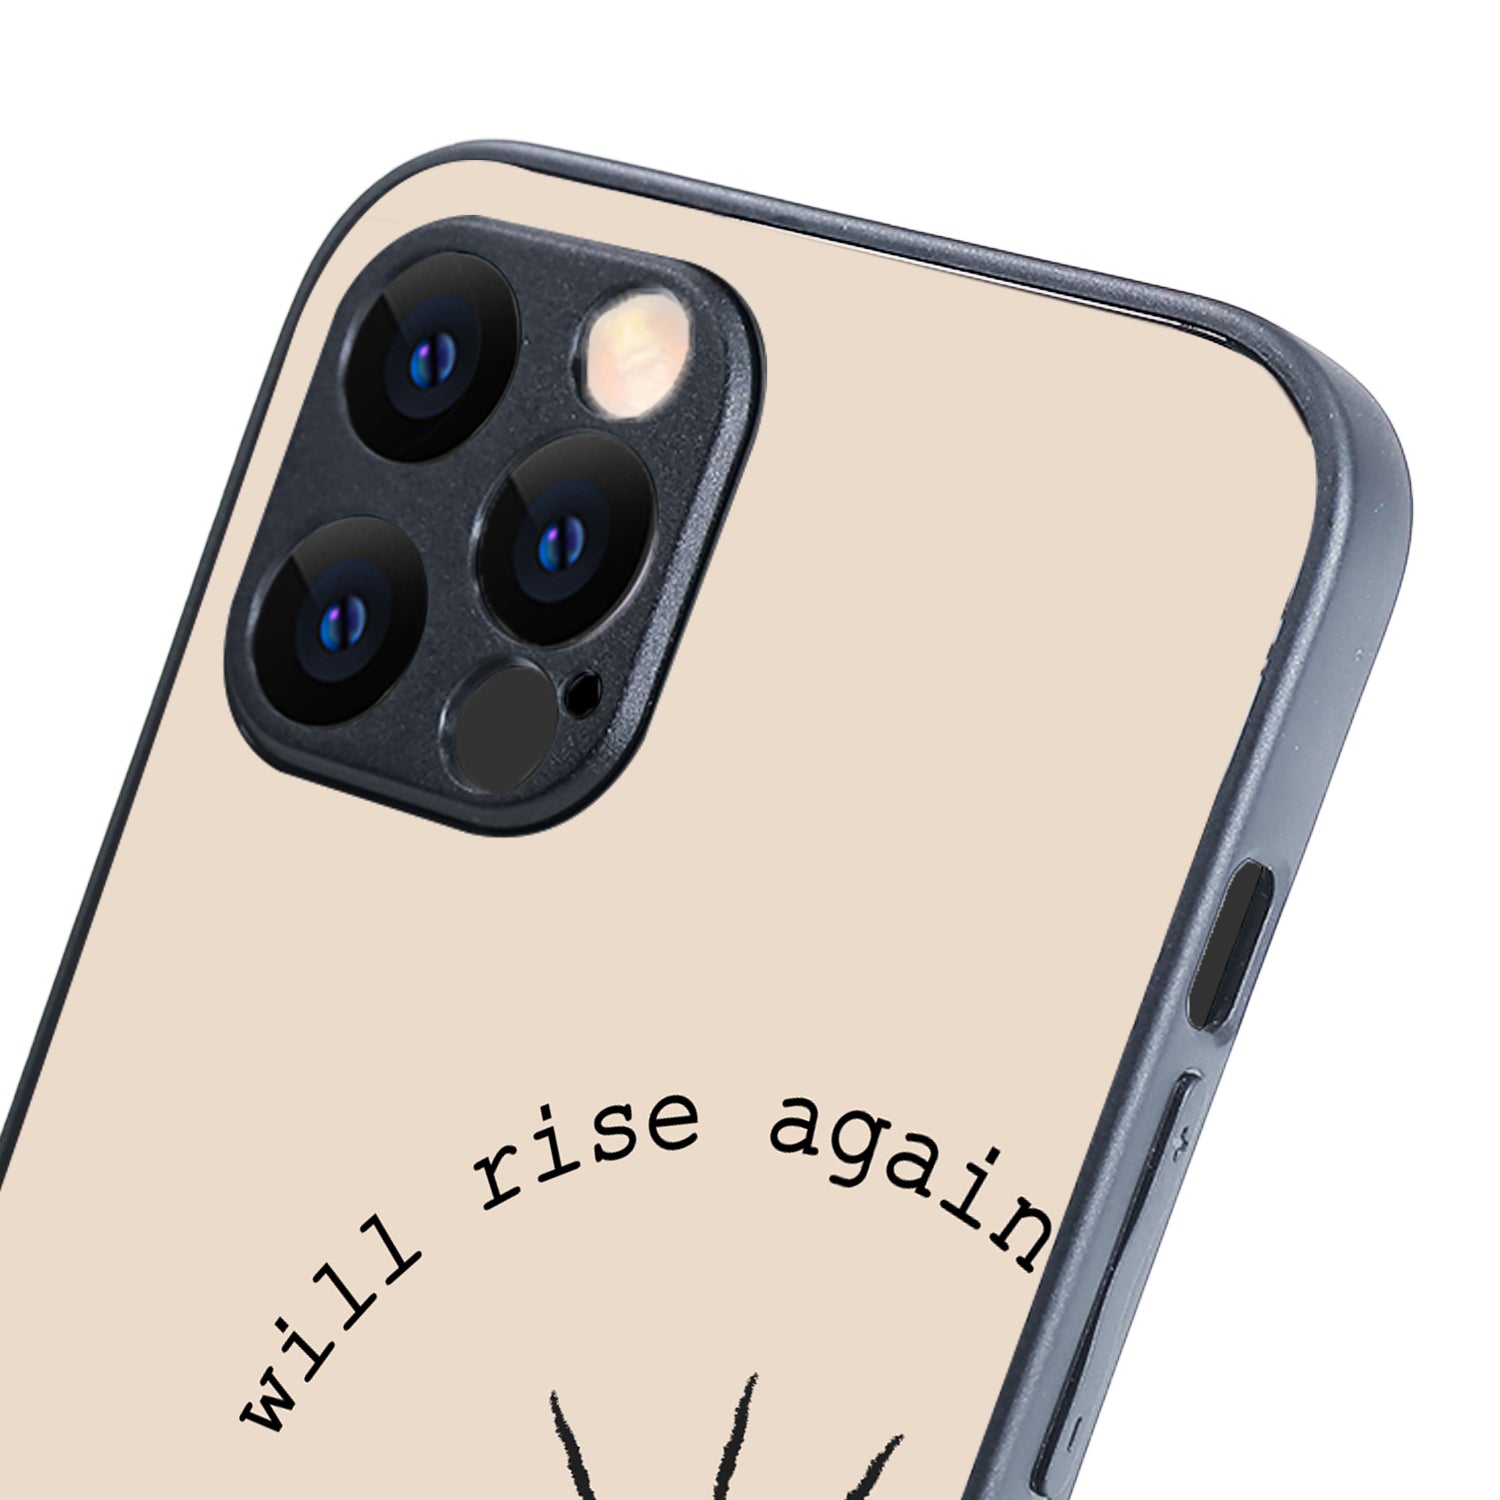 Rise Like Sun Bff iPhone 12 Pro Max Case